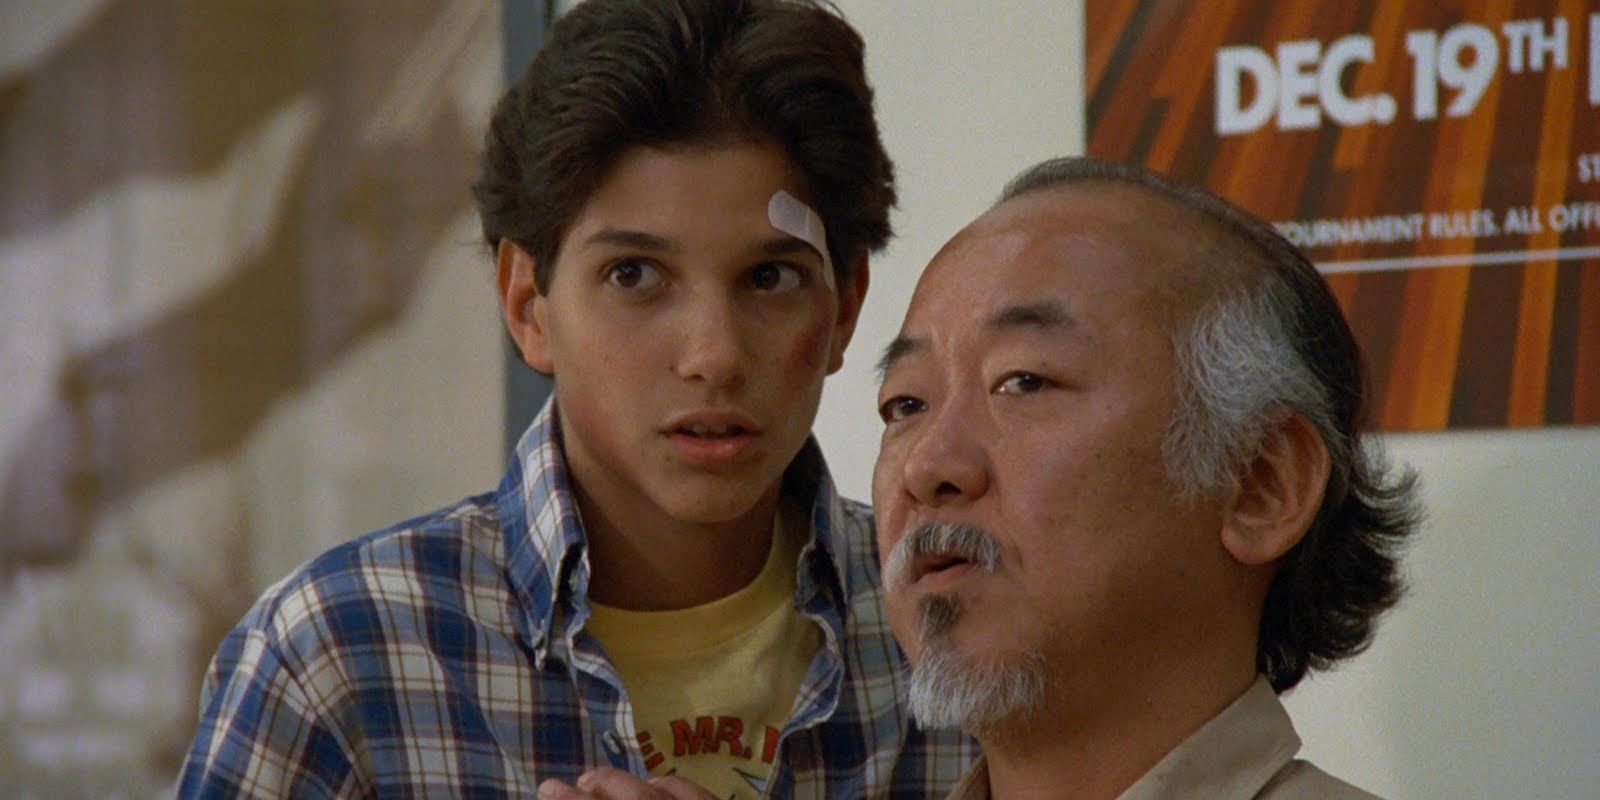 Ralph Macchio and Pat Morita as Mr. Miyagi in The Karate Kid